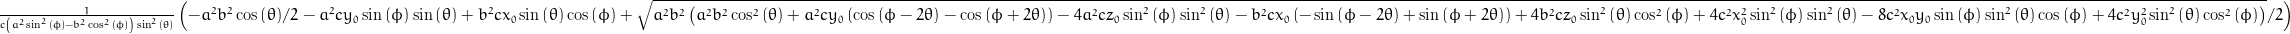 \frac{1}{c \left(a^{2} \sin^{2}{\left (\phi \right )} - b^{2} \cos^{2}{\left (\phi \right )}\right) \sin^{2}{\left (\theta \right )}} \left(- \frac{a^{2} b^{2}}{2} \cos{\left (\theta \right )} - a^{2} c y_{0} \sin{\left (\phi \right )} \sin{\left (\theta \right )} + b^{2} c x_{0} \sin{\left (\theta \right )} \cos{\left (\phi \right )} + \frac{1}{2} \sqrt{a^{2} b^{2} \left(a^{2} b^{2} \cos^{2}{\left (\theta \right )} + a^{2} c y_{0} \left(\cos{\left (\phi - 2 \theta \right )} - \cos{\left (\phi + 2 \theta \right )}\right) - 4 a^{2} c z_{0} \sin^{2}{\left (\phi \right )} \sin^{2}{\left (\theta \right )} - b^{2} c x_{0} \left(- \sin{\left (\phi - 2 \theta \right )} + \sin{\left (\phi + 2 \theta \right )}\right) + 4 b^{2} c z_{0} \sin^{2}{\left (\theta \right )} \cos^{2}{\left (\phi \right )} + 4 c^{2} x_{0}^{2} \sin^{2}{\left (\phi \right )} \sin^{2}{\left (\theta \right )} - 8 c^{2} x_{0} y_{0} \sin{\left (\phi \right )} \sin^{2}{\left (\theta \right )} \cos{\left (\phi \right )} + 4 c^{2} y_{0}^{2} \sin^{2}{\left (\theta \right )} \cos^{2}{\left (\phi \right )}\right)}\right)